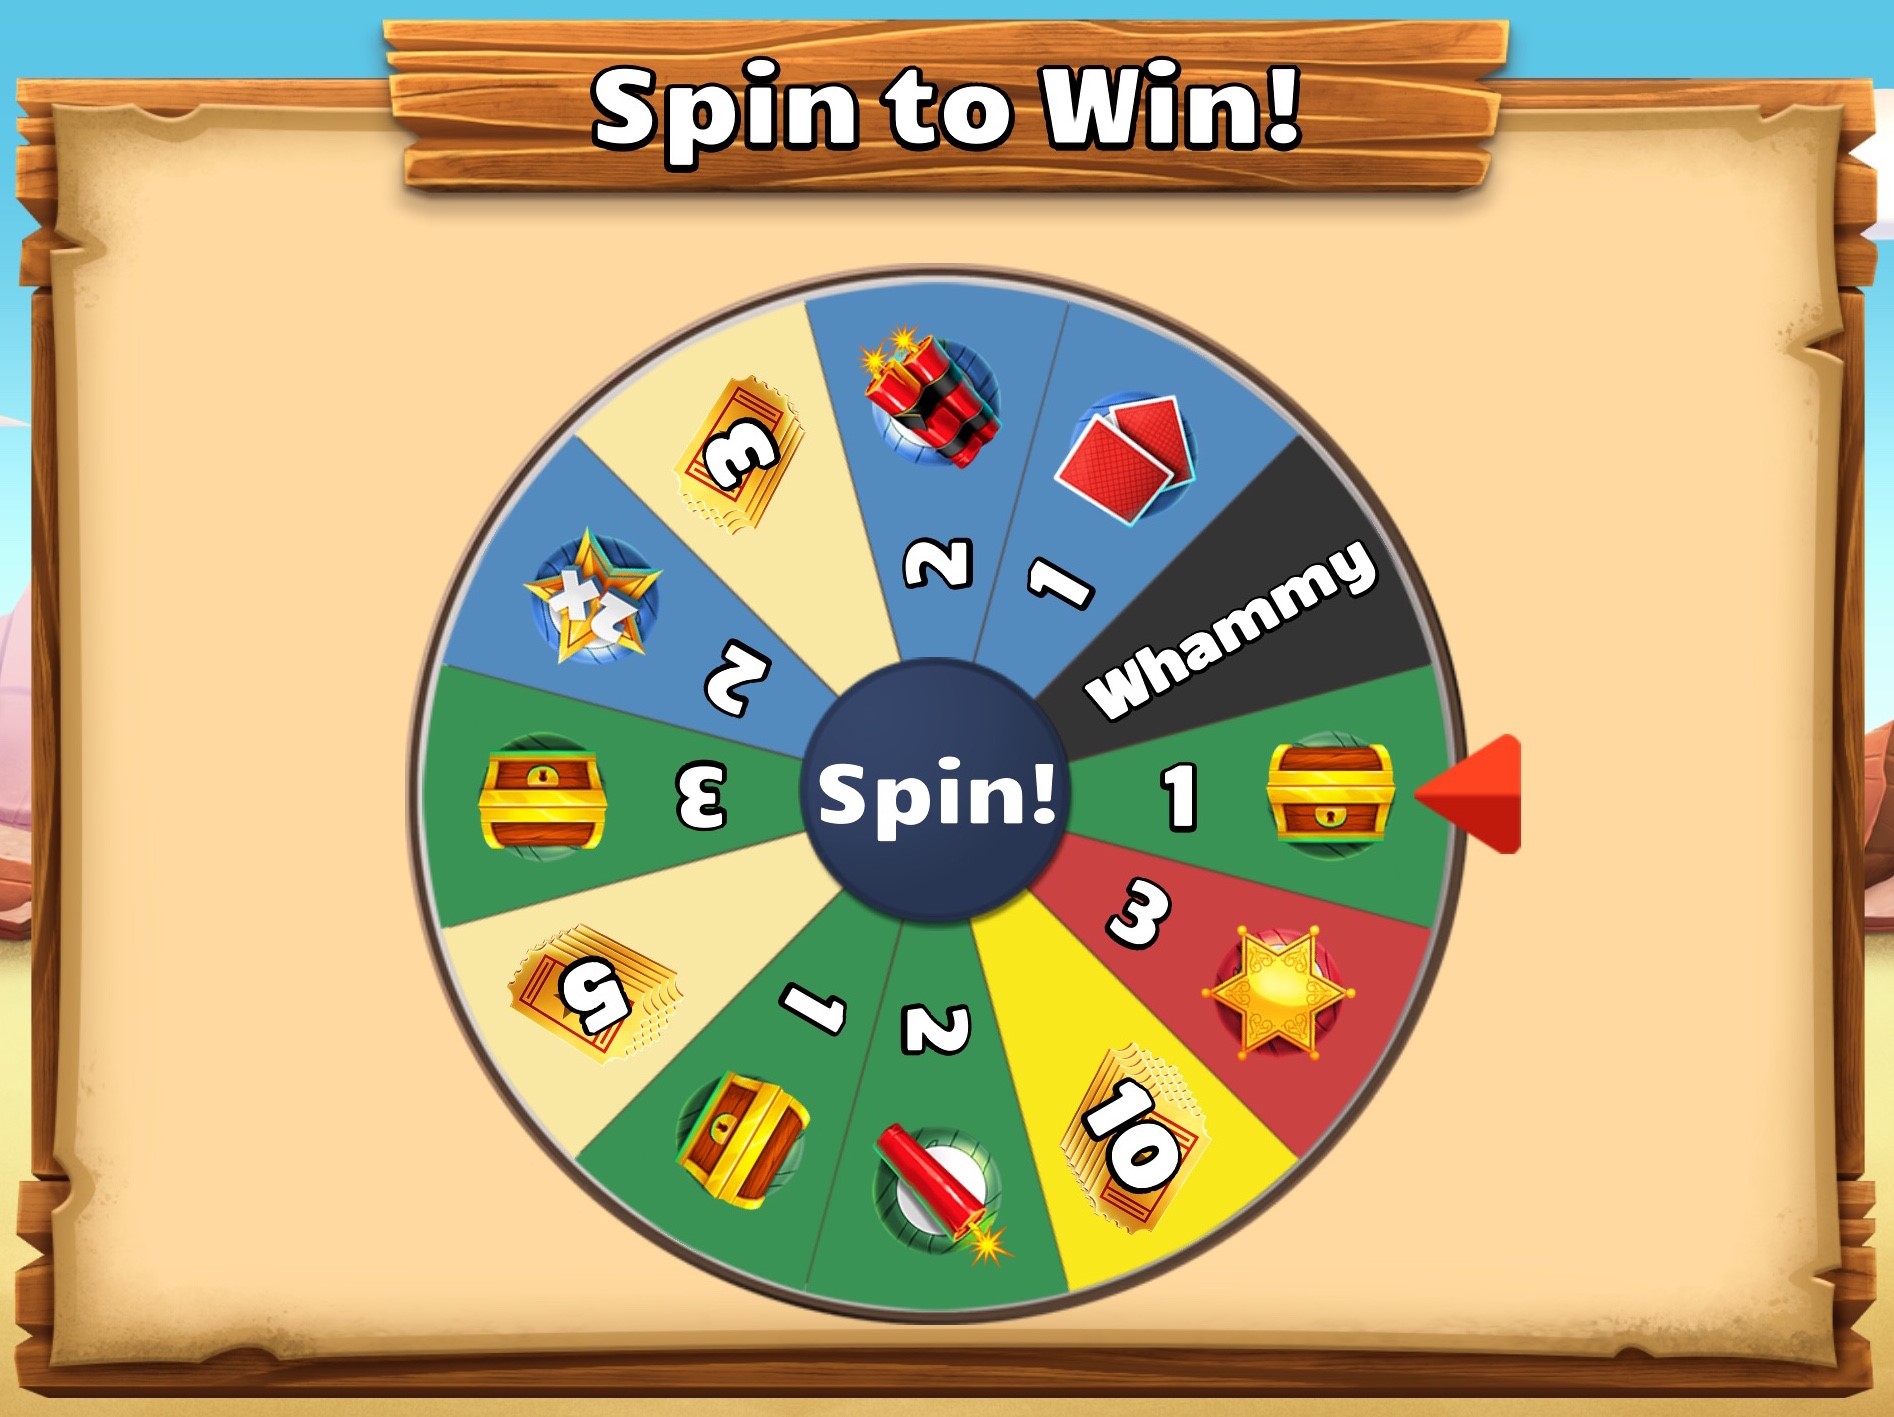 BSD_mini-games-spin-to-win-wheel.jpg